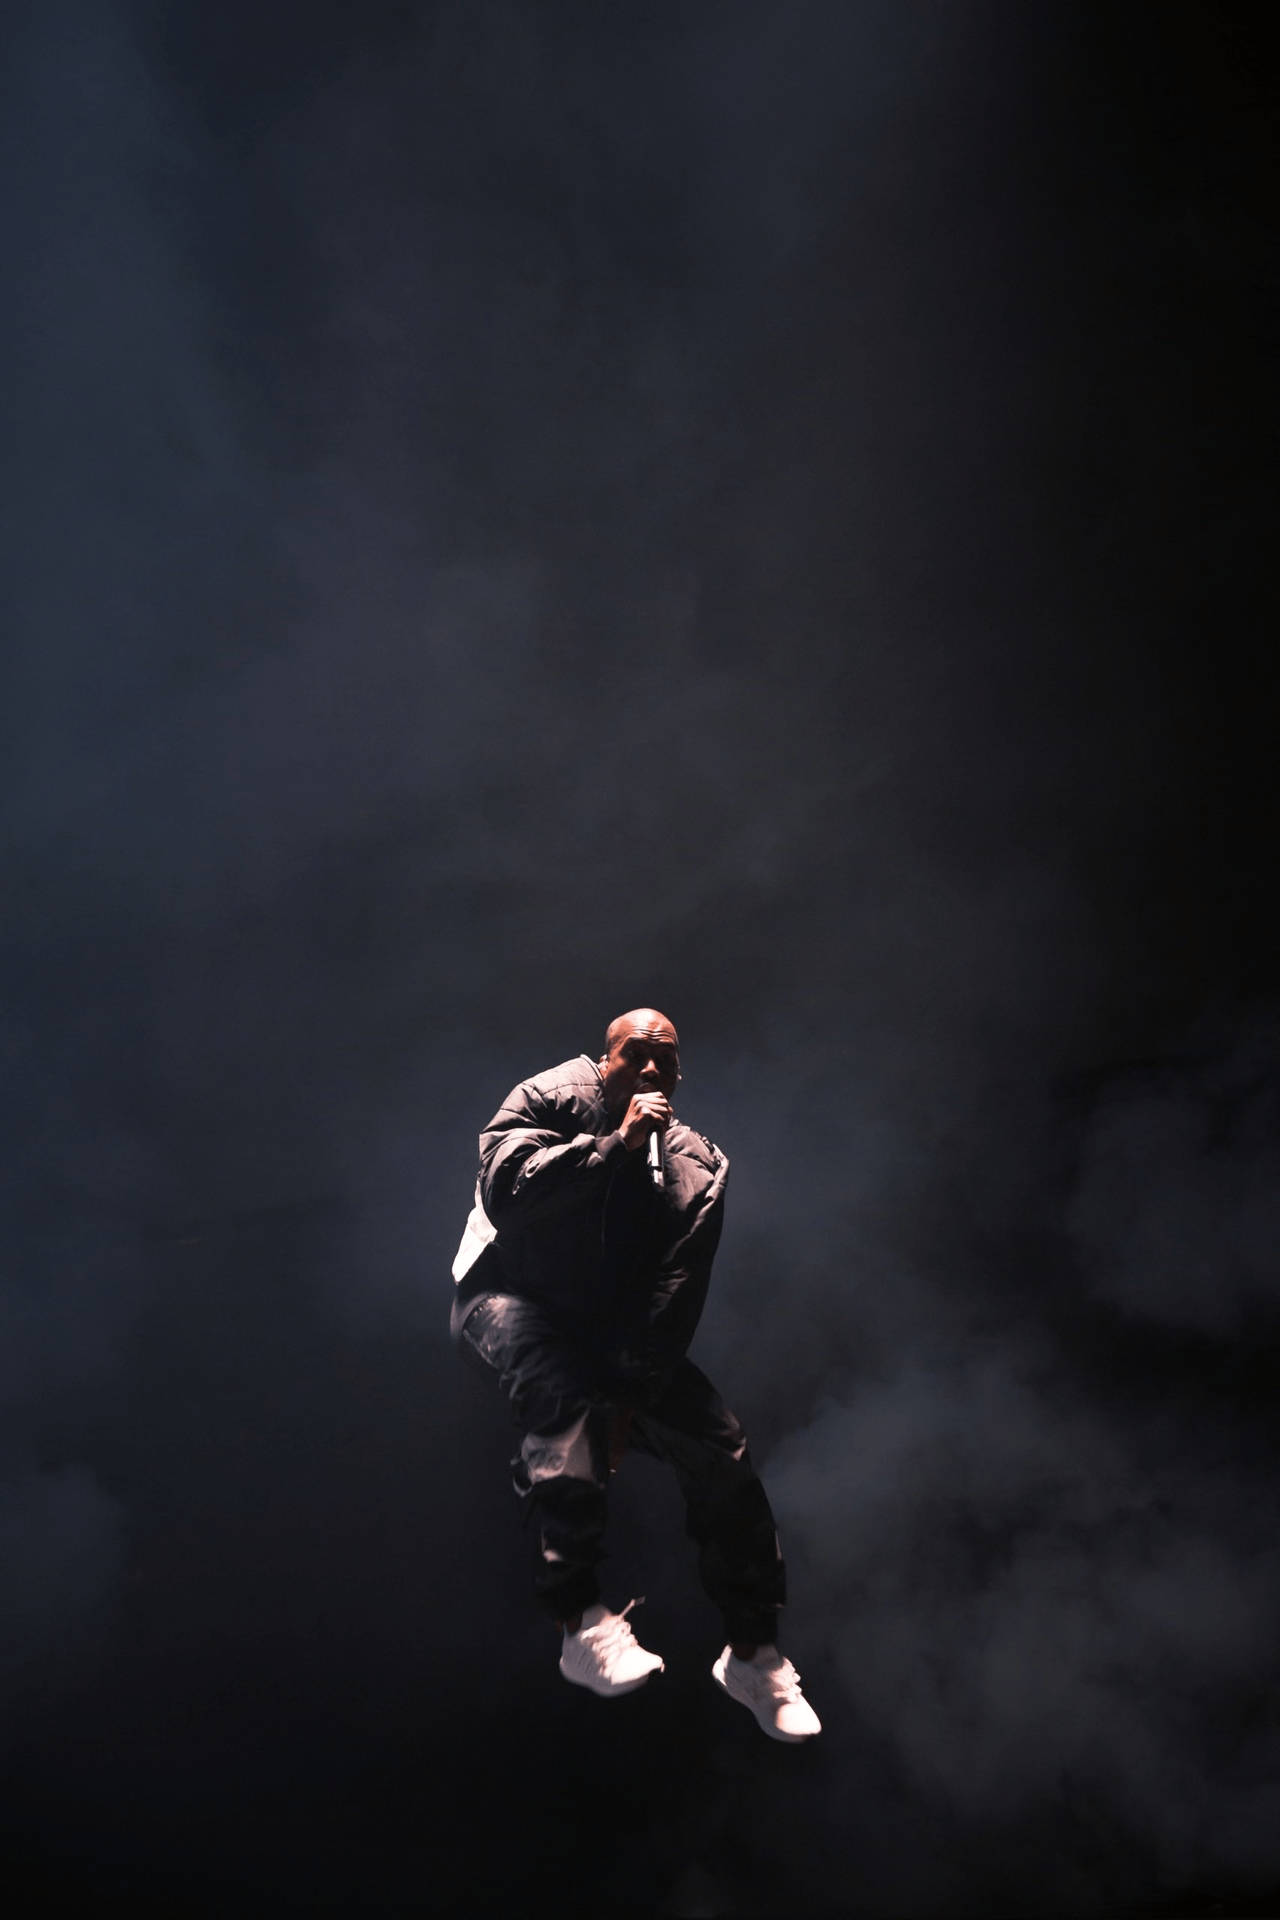 Kanye West Jumping Midair